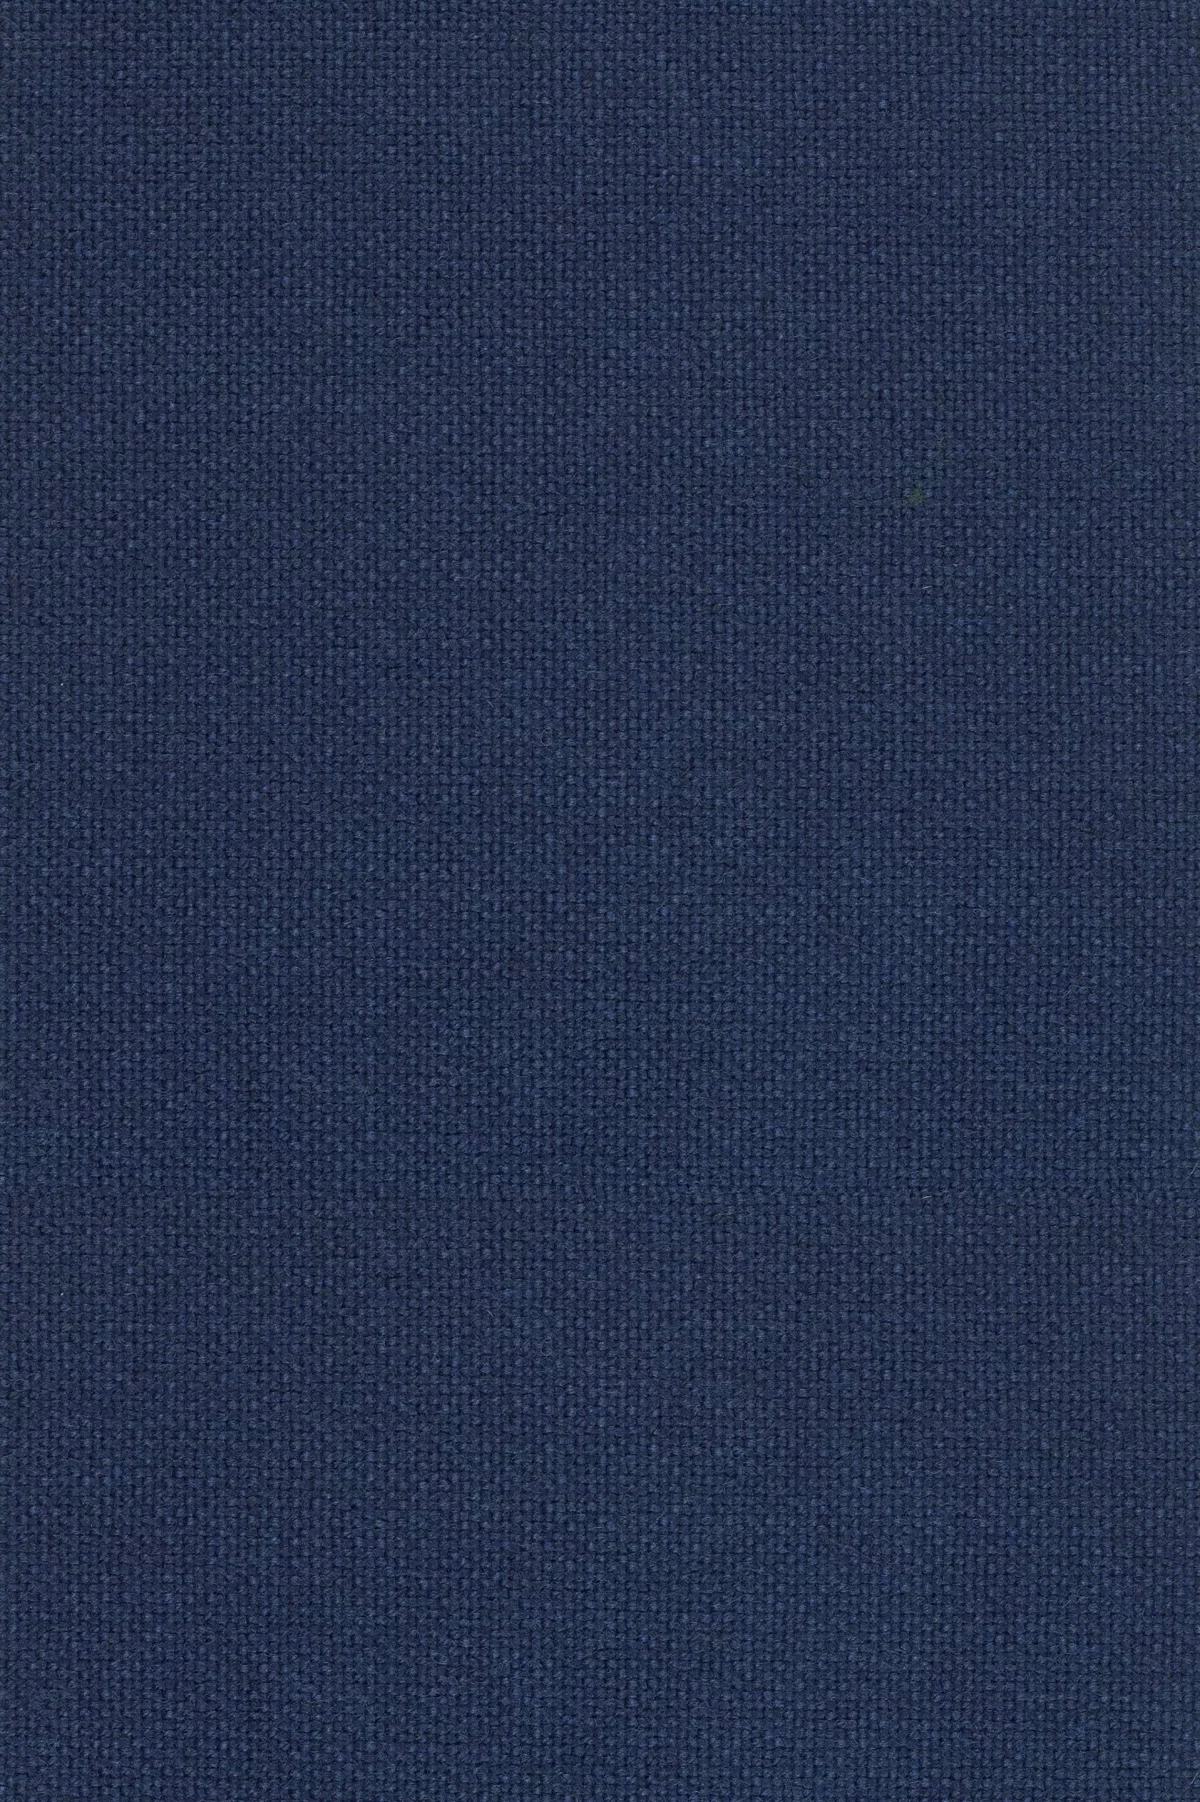 Fabric sample Hallingdal 65 764 blue